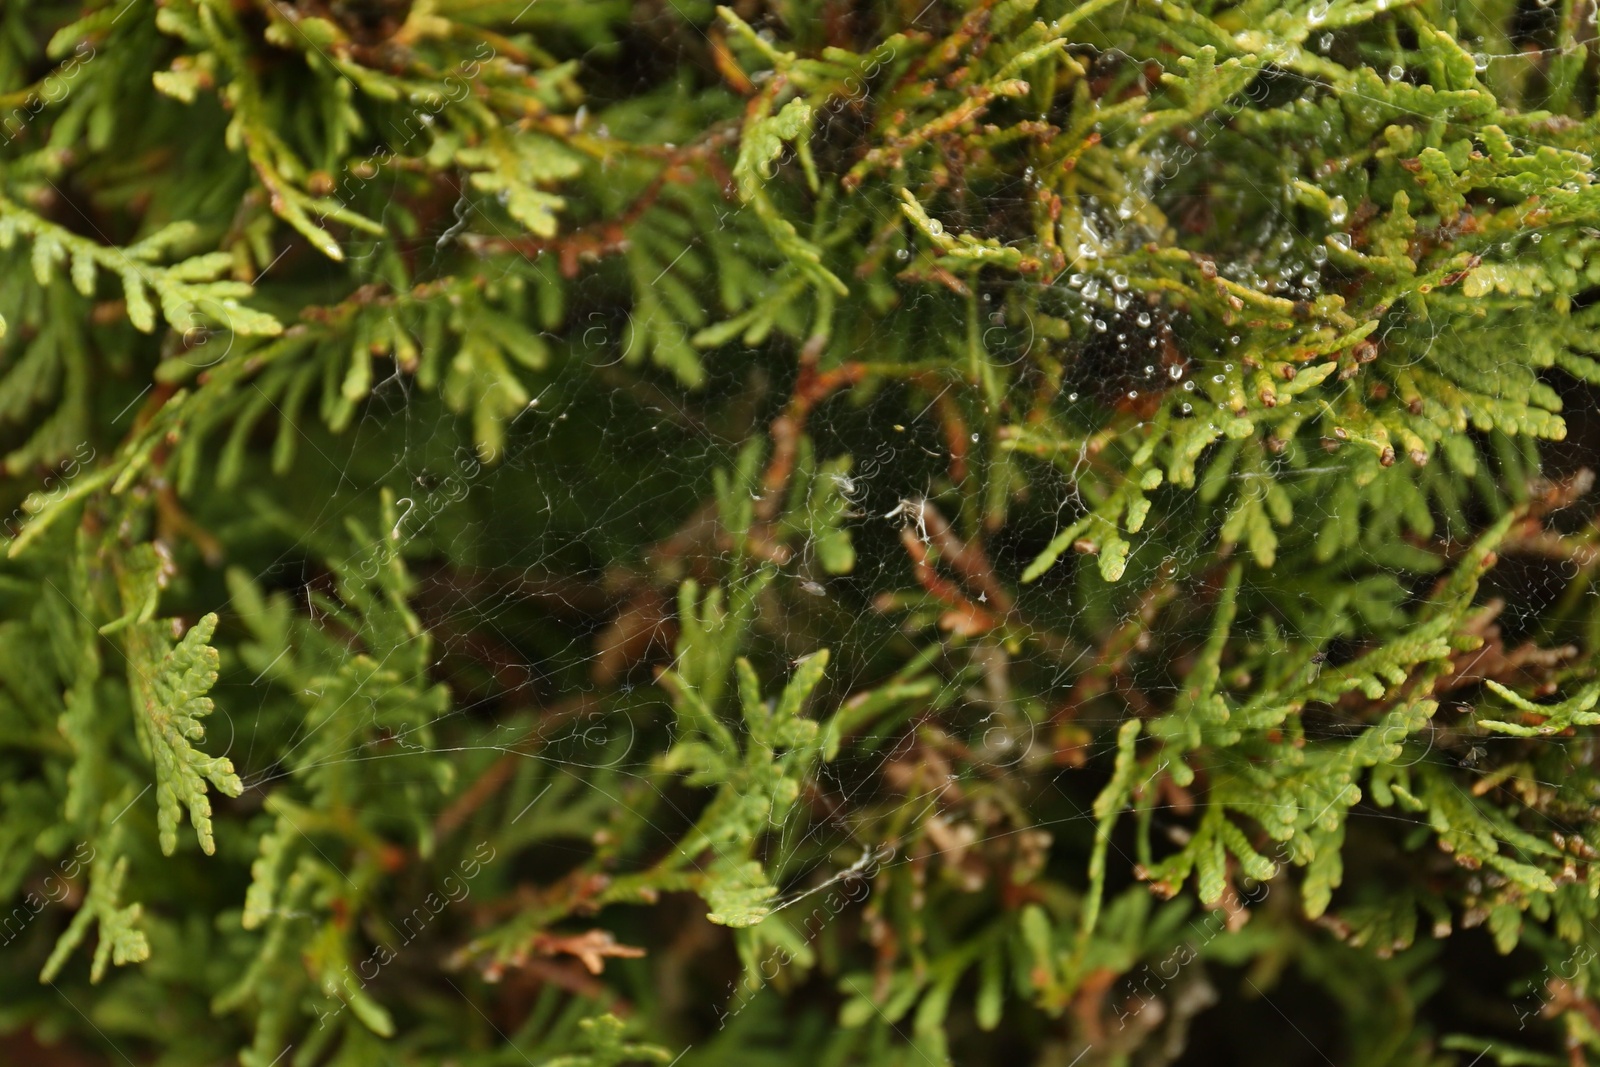 Photo of Cobweb with dew drops on thuja shrub outdoors, closeup